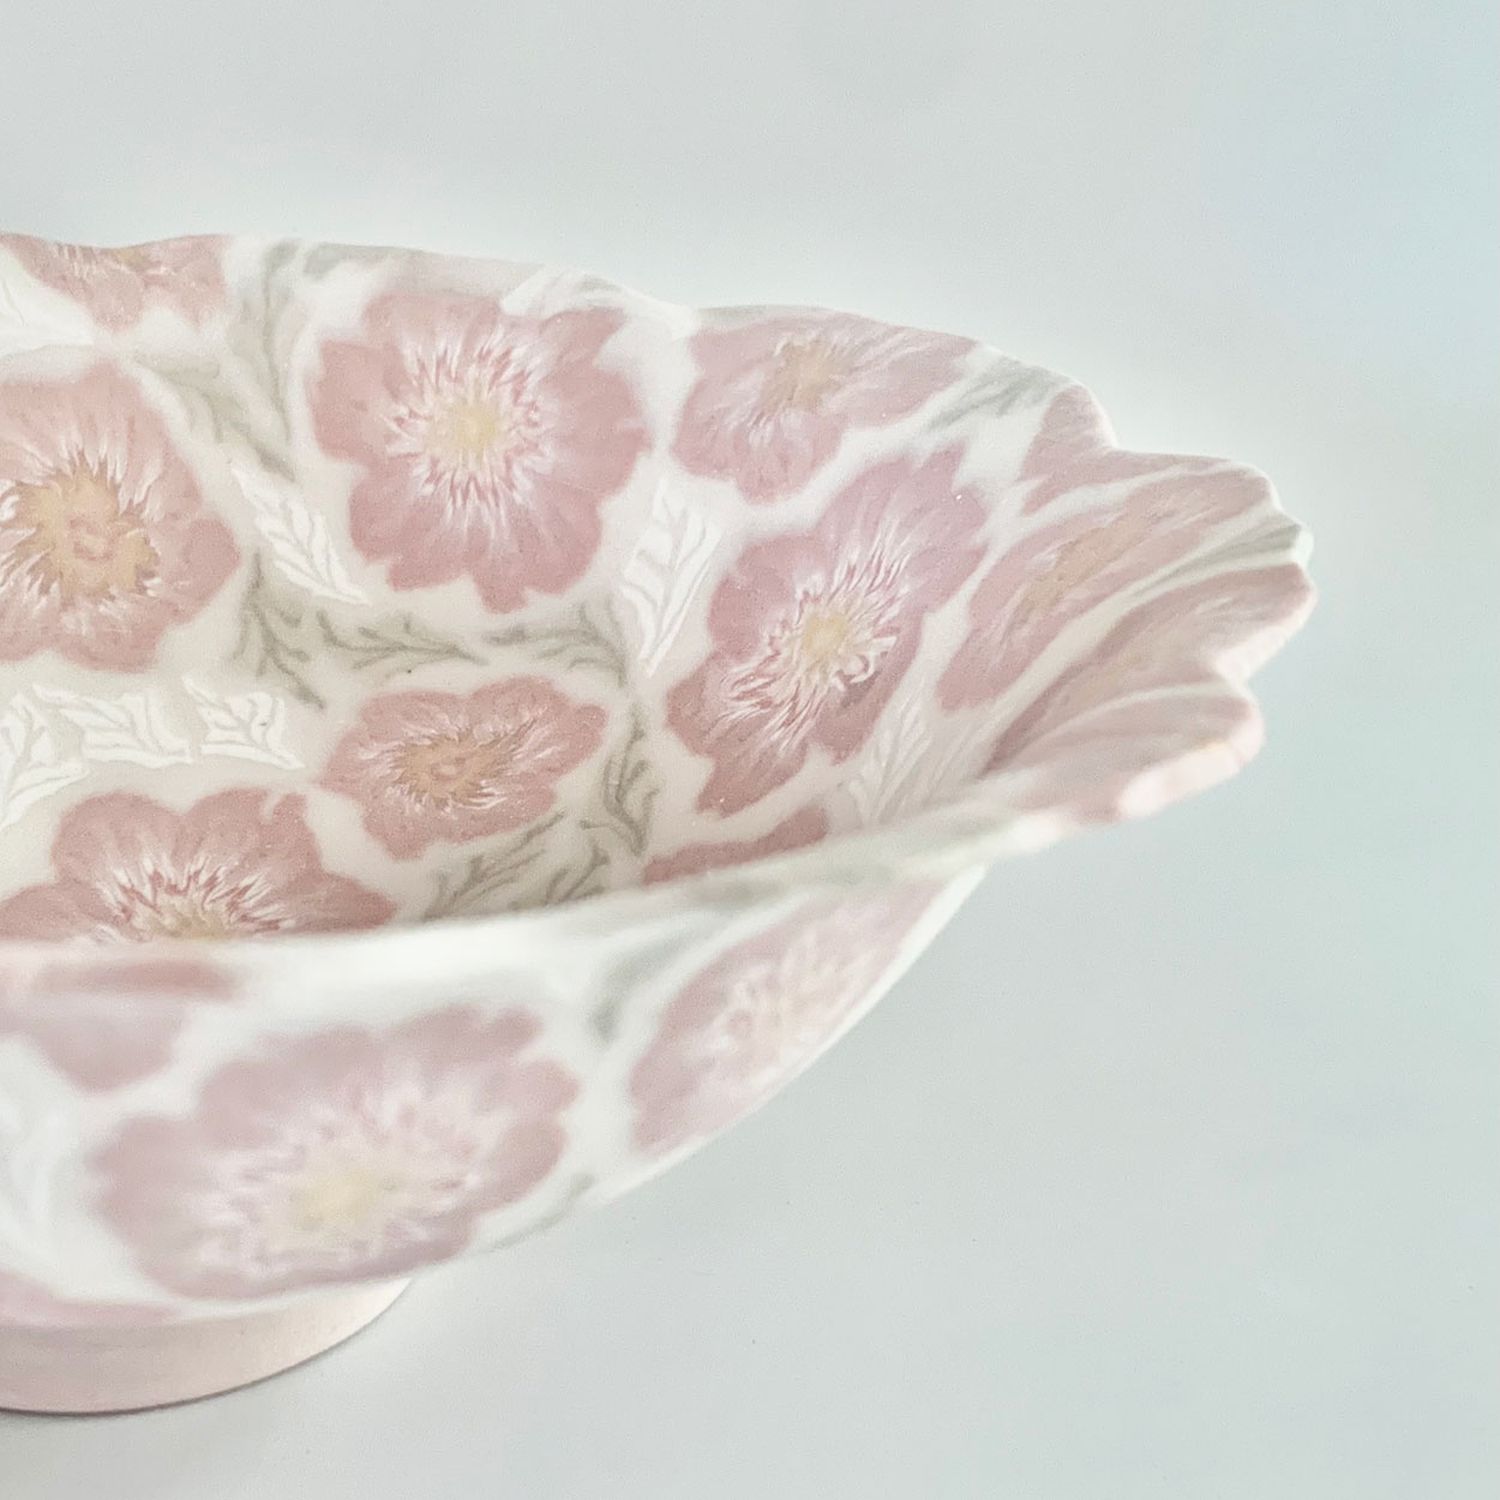 Eiko Maeda: Pink Bowl Product Image 2 of 2